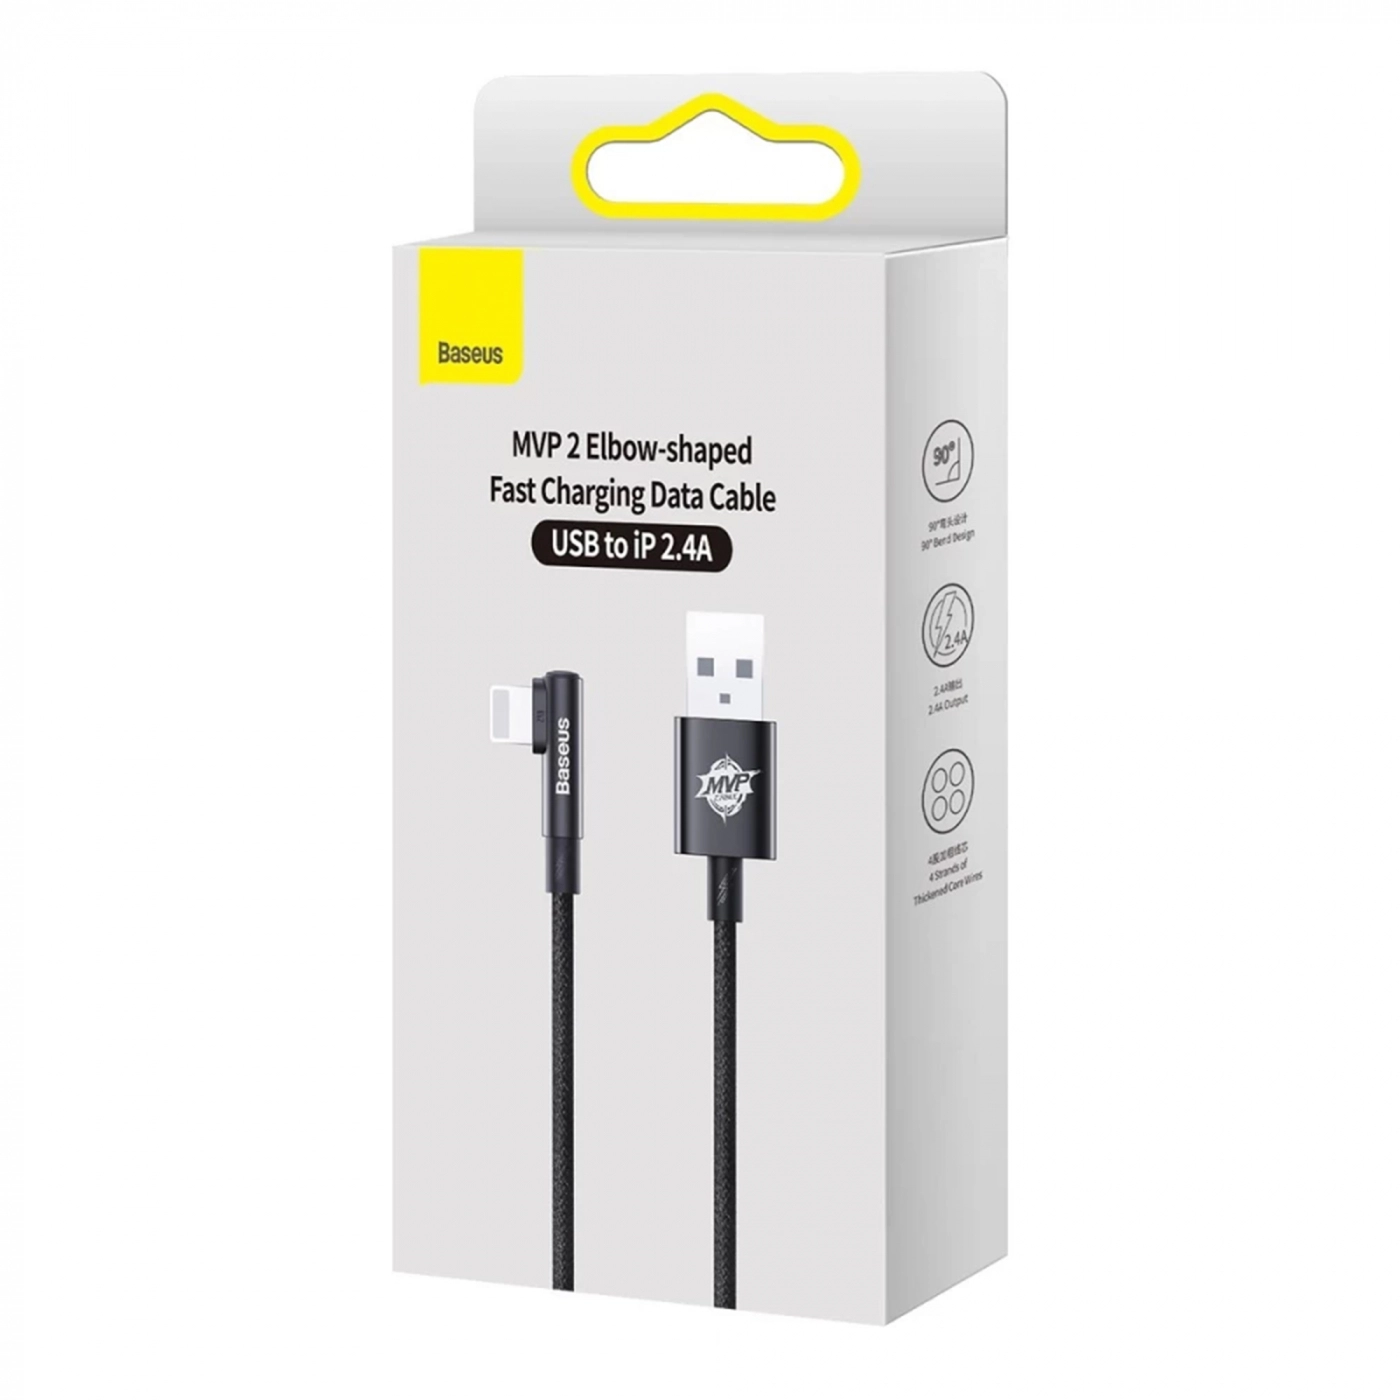 Купить Кабель Baseus MVP 2 Elbow-shaped Fast Charging Data Cable USB to iP 2.4A 1m Black - фото 8